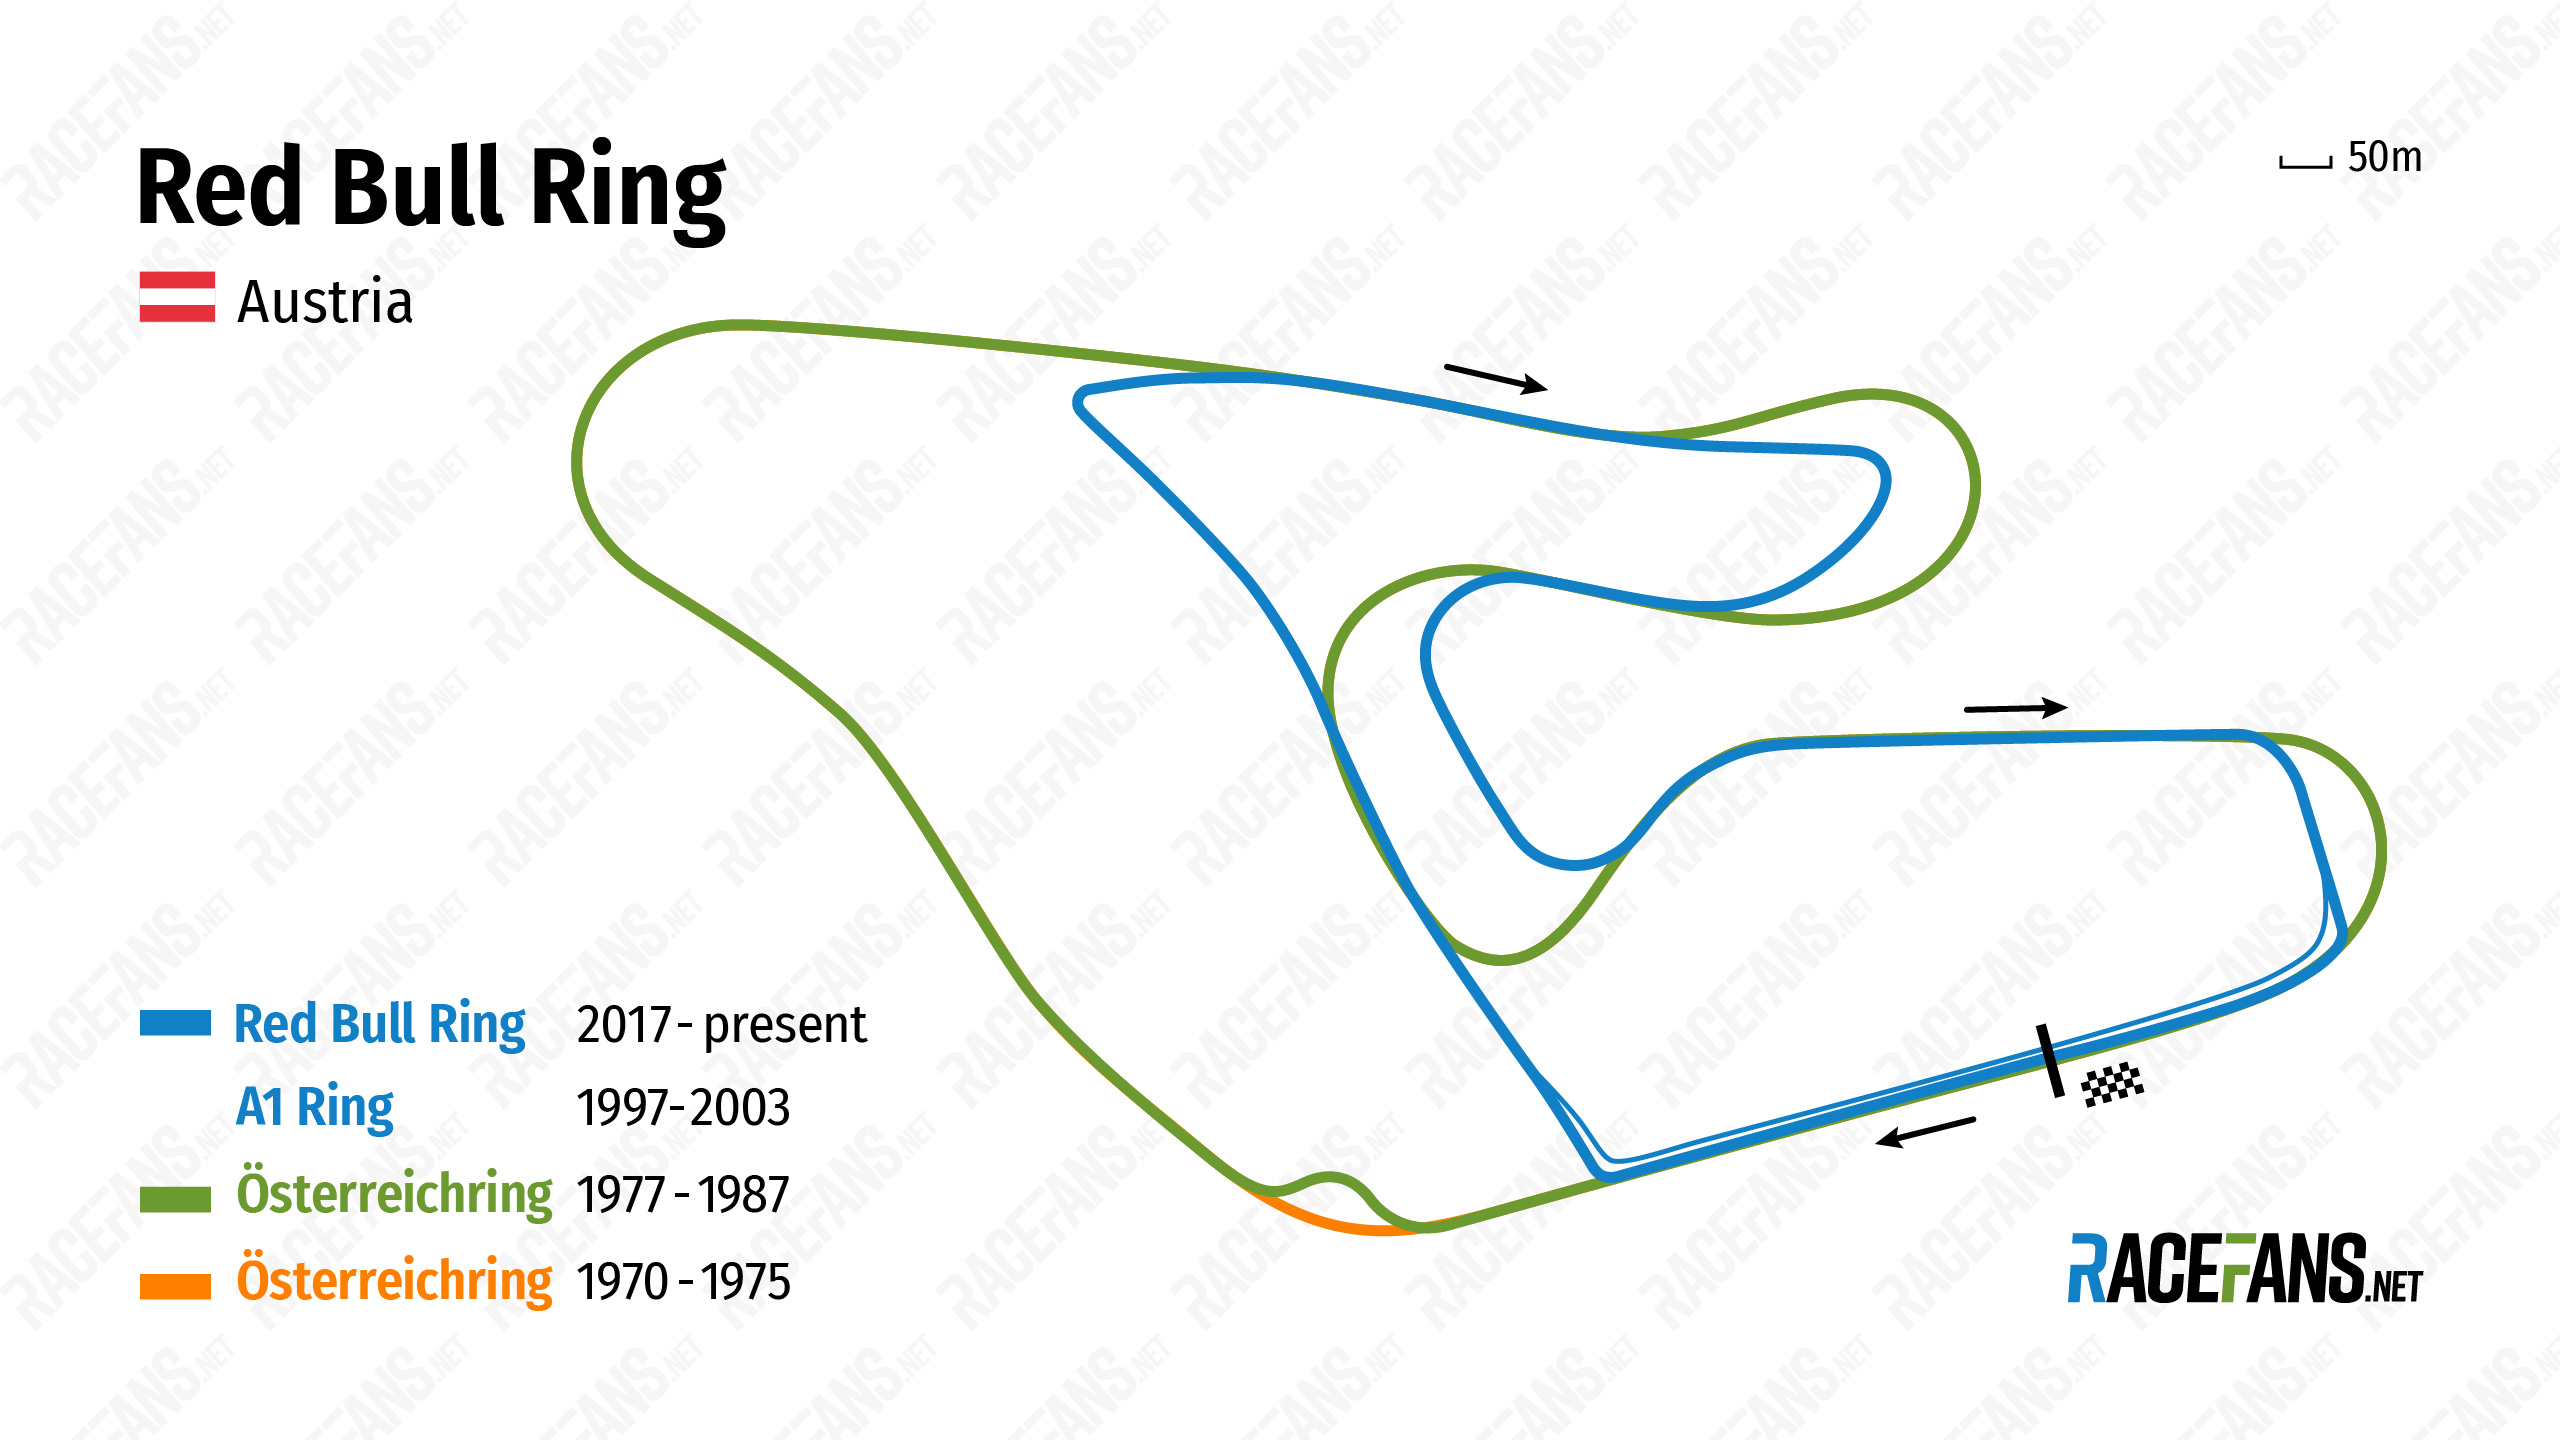 Red Bull Ring circuit variations, 1970-2020